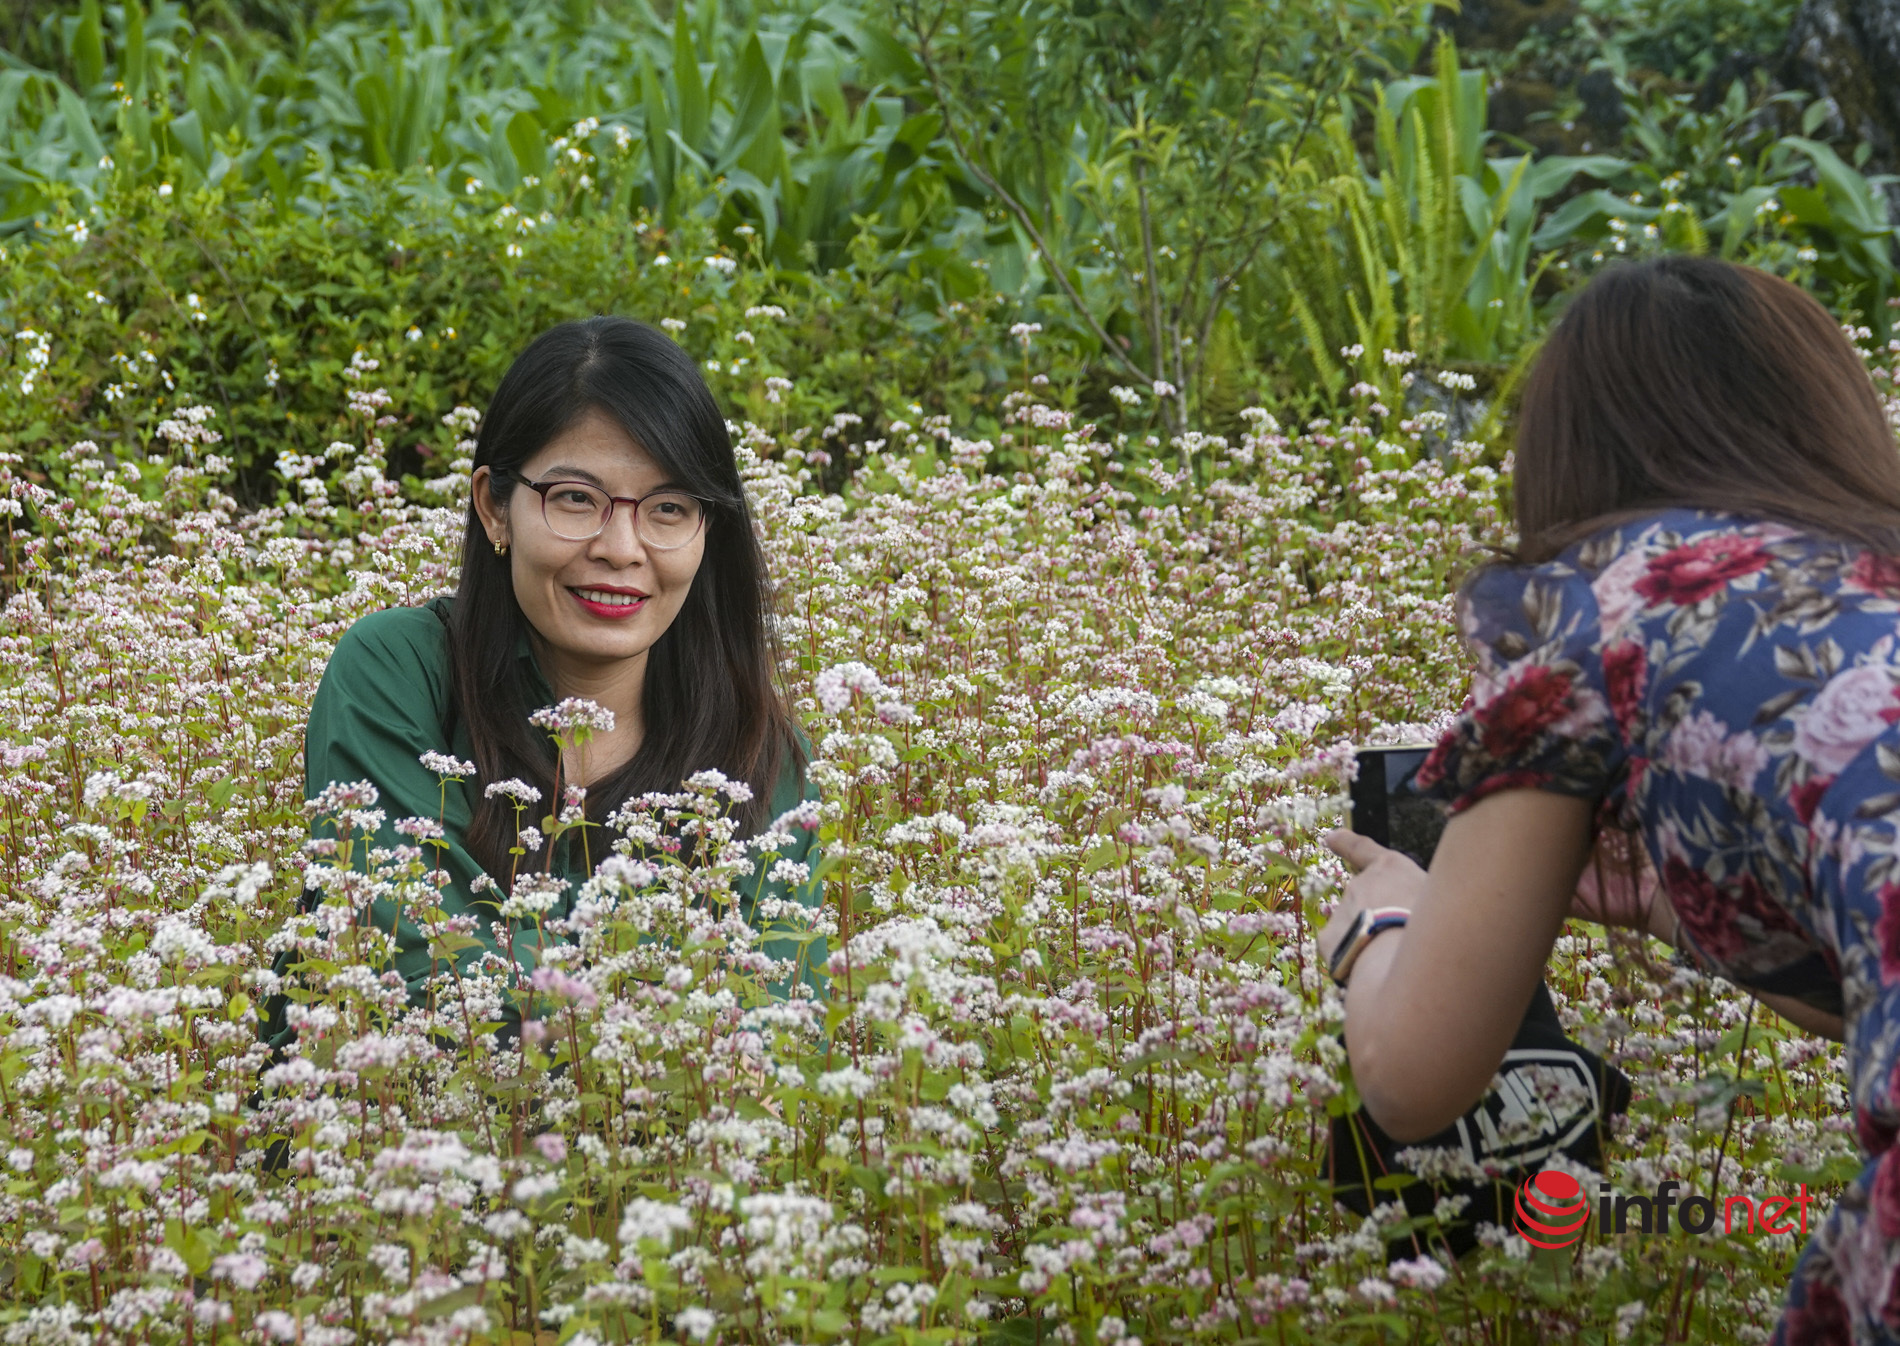 Watching buckwheat flowers bloom 'out of season' on Ha Giang rocky plateau